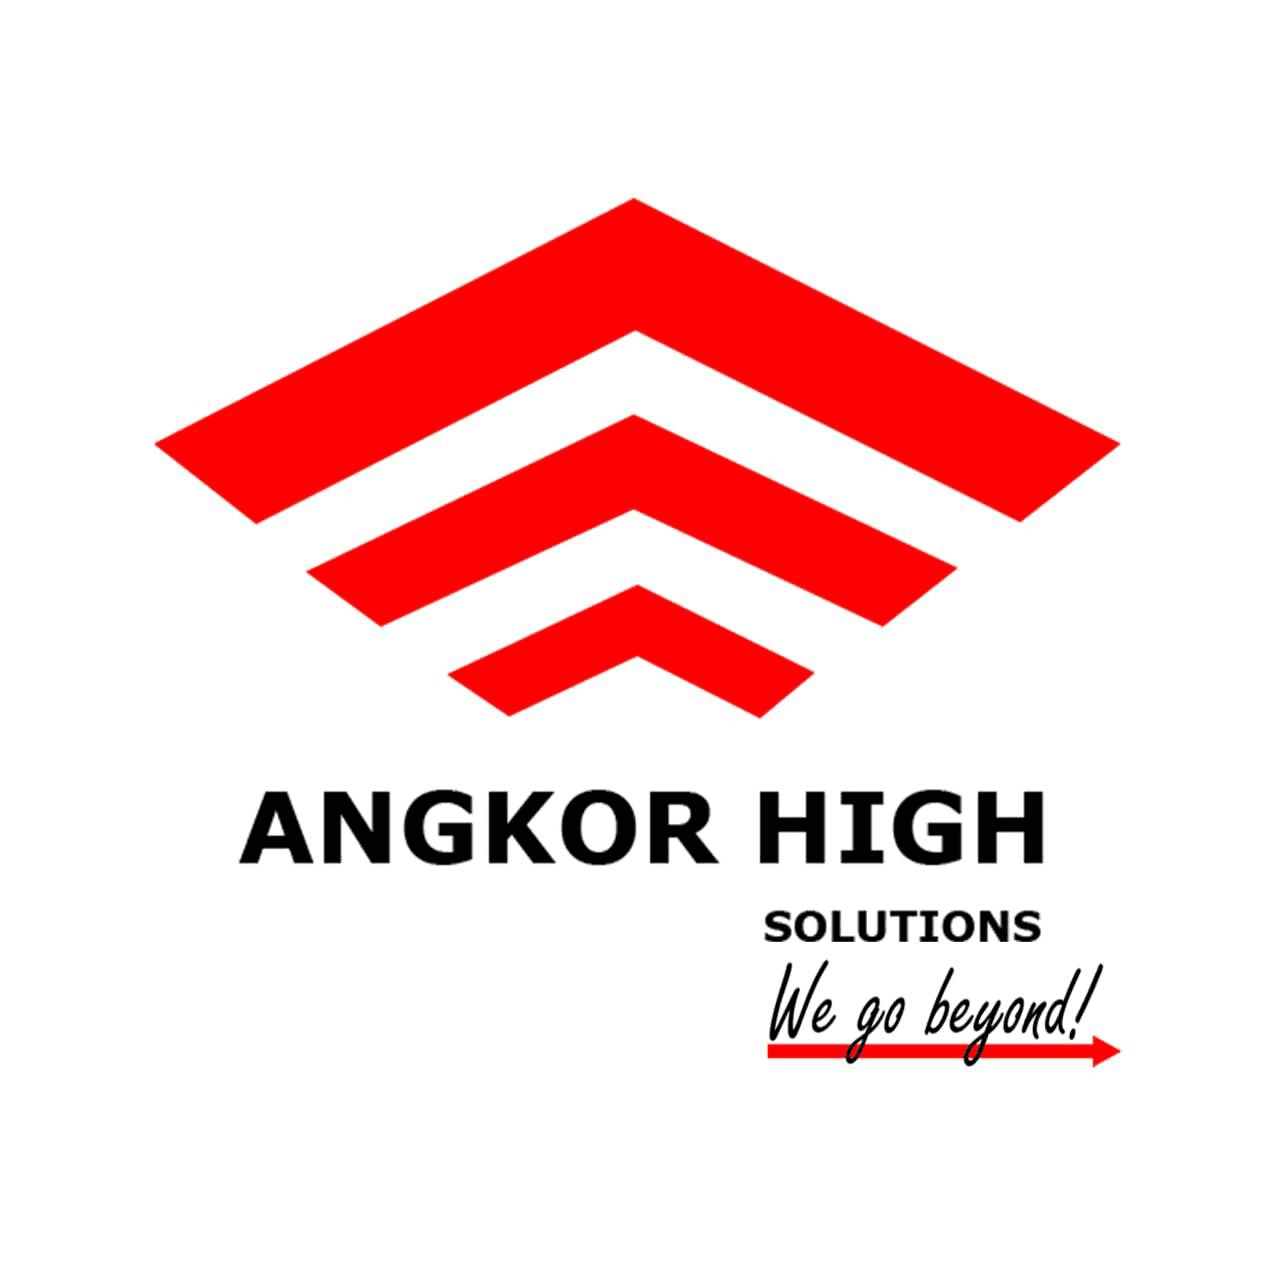 Angkor High Solutions (AHS). We Go Beyond